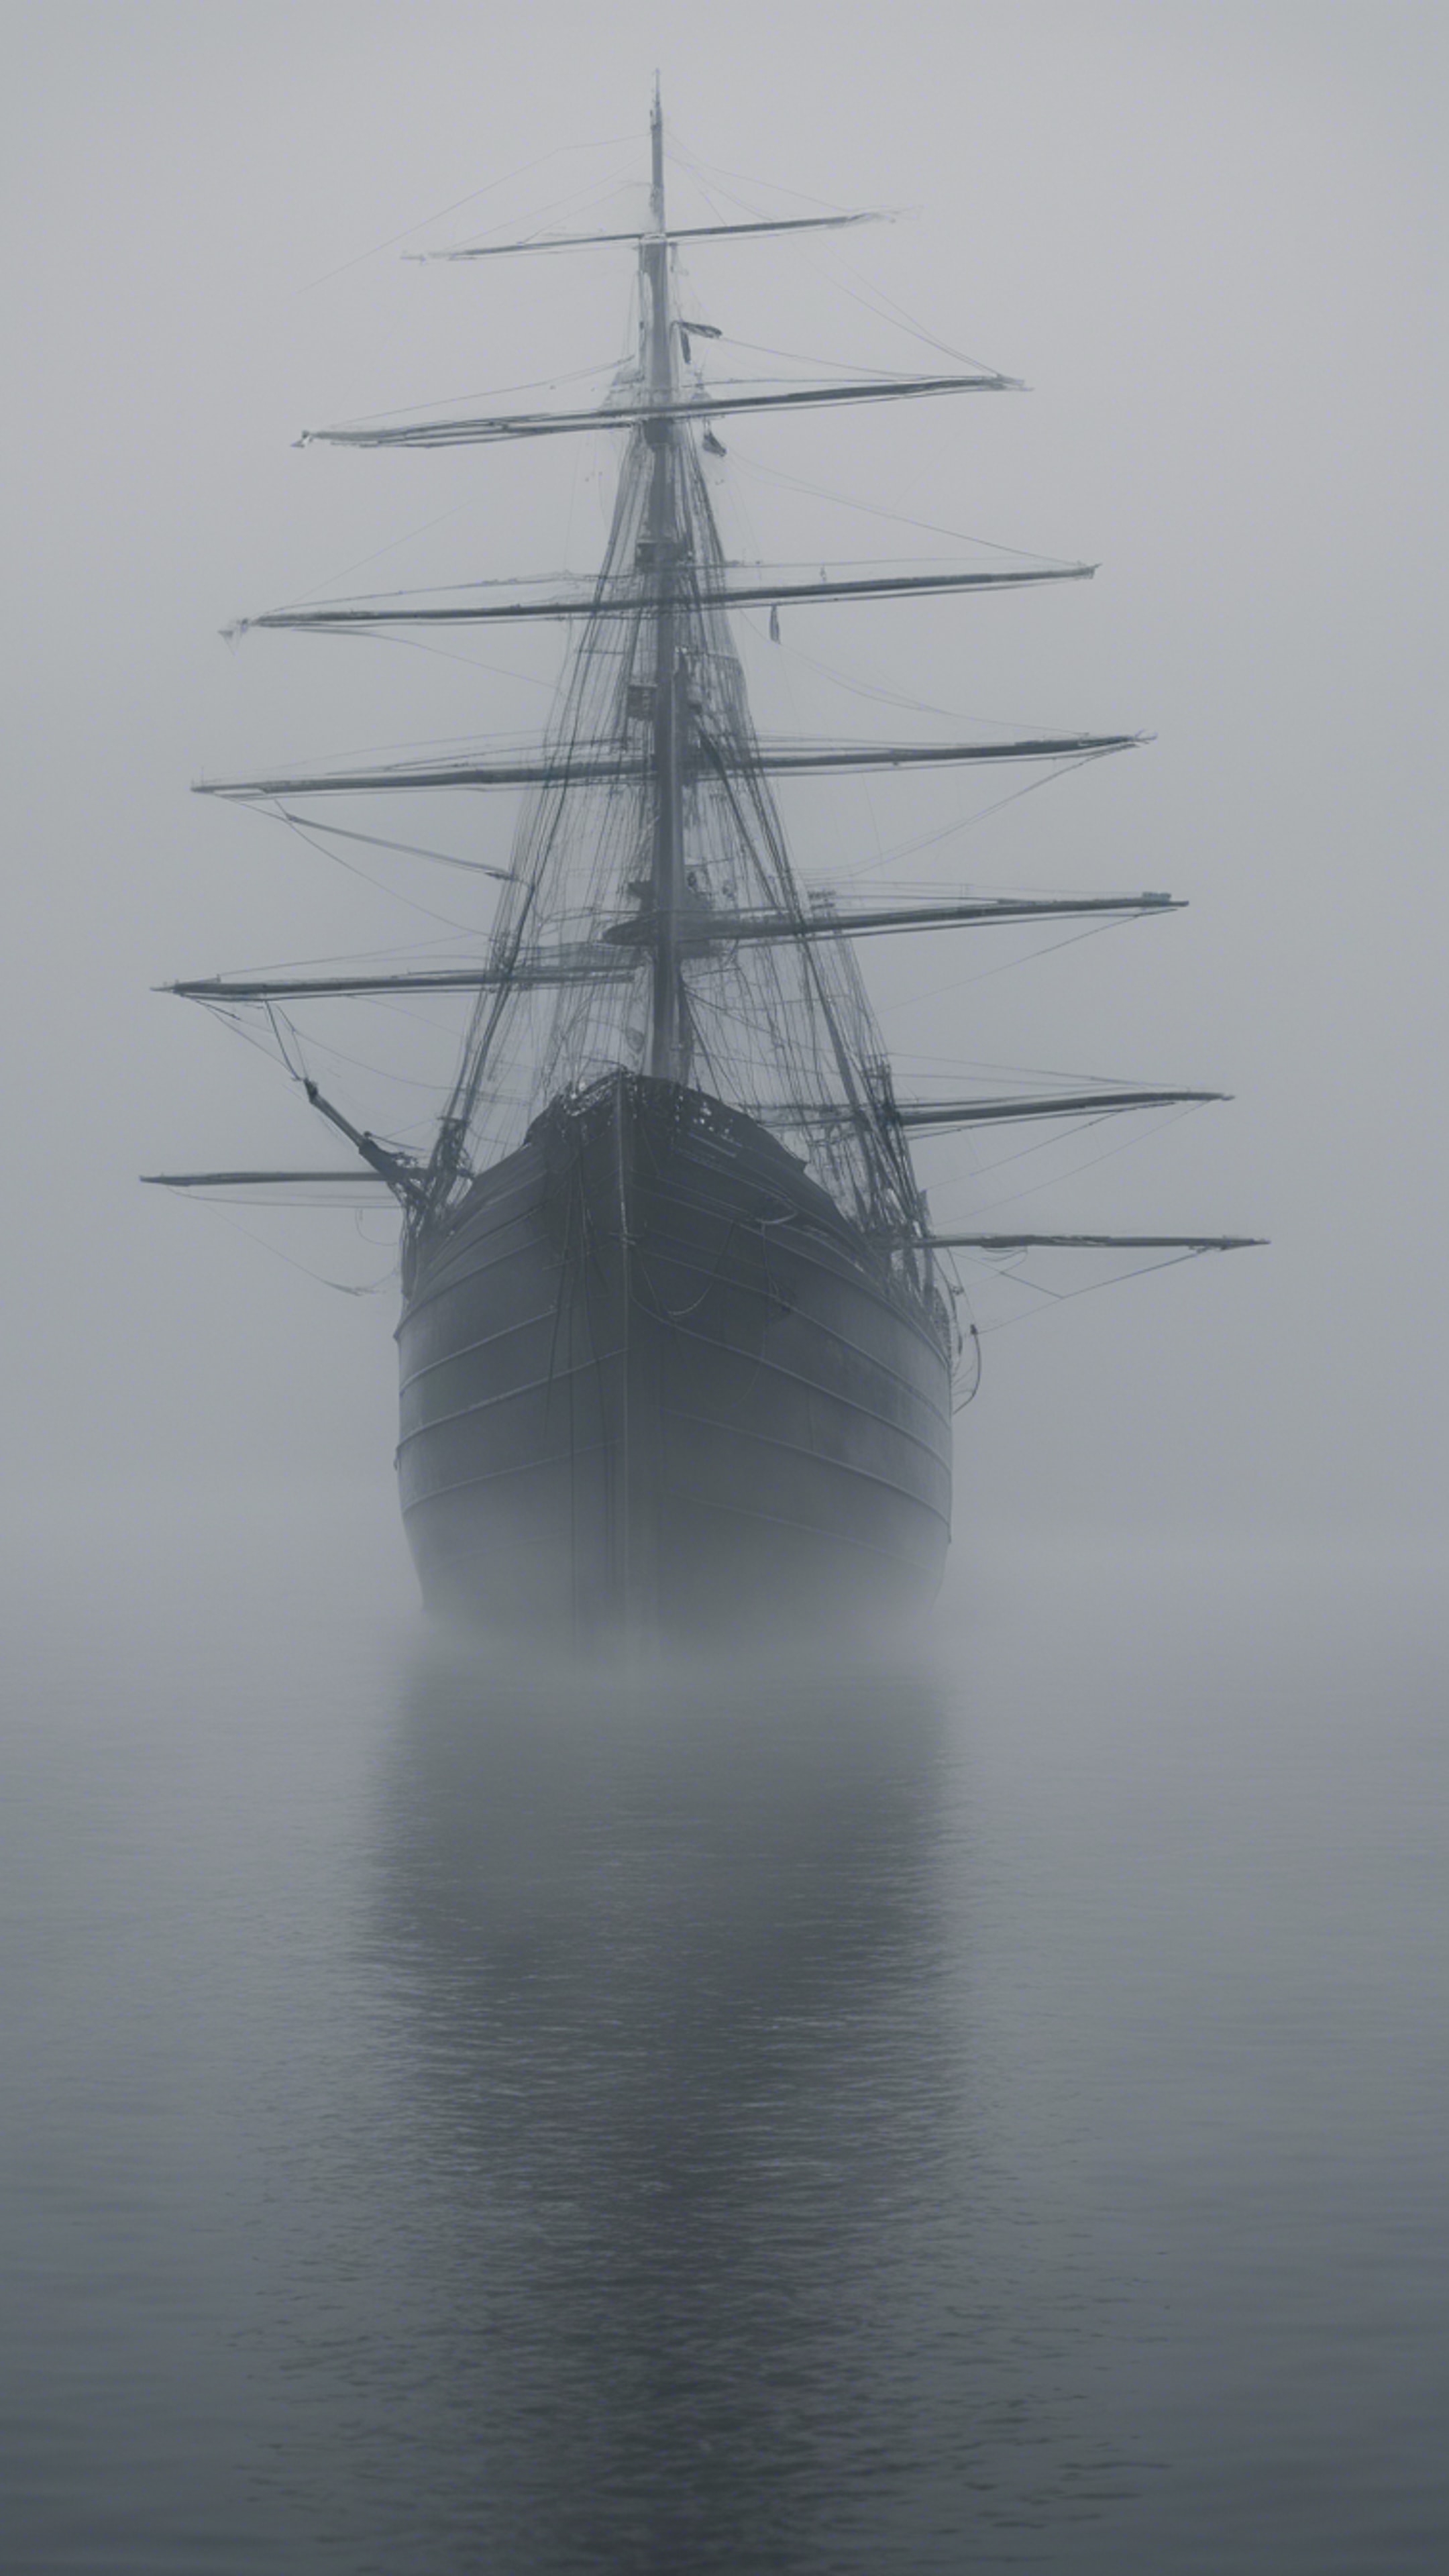 A ghost ship sailing through heavy fog, its masts obscured in drifting grey smoke. Tapeta[277c5cc3bc0e4445b824]